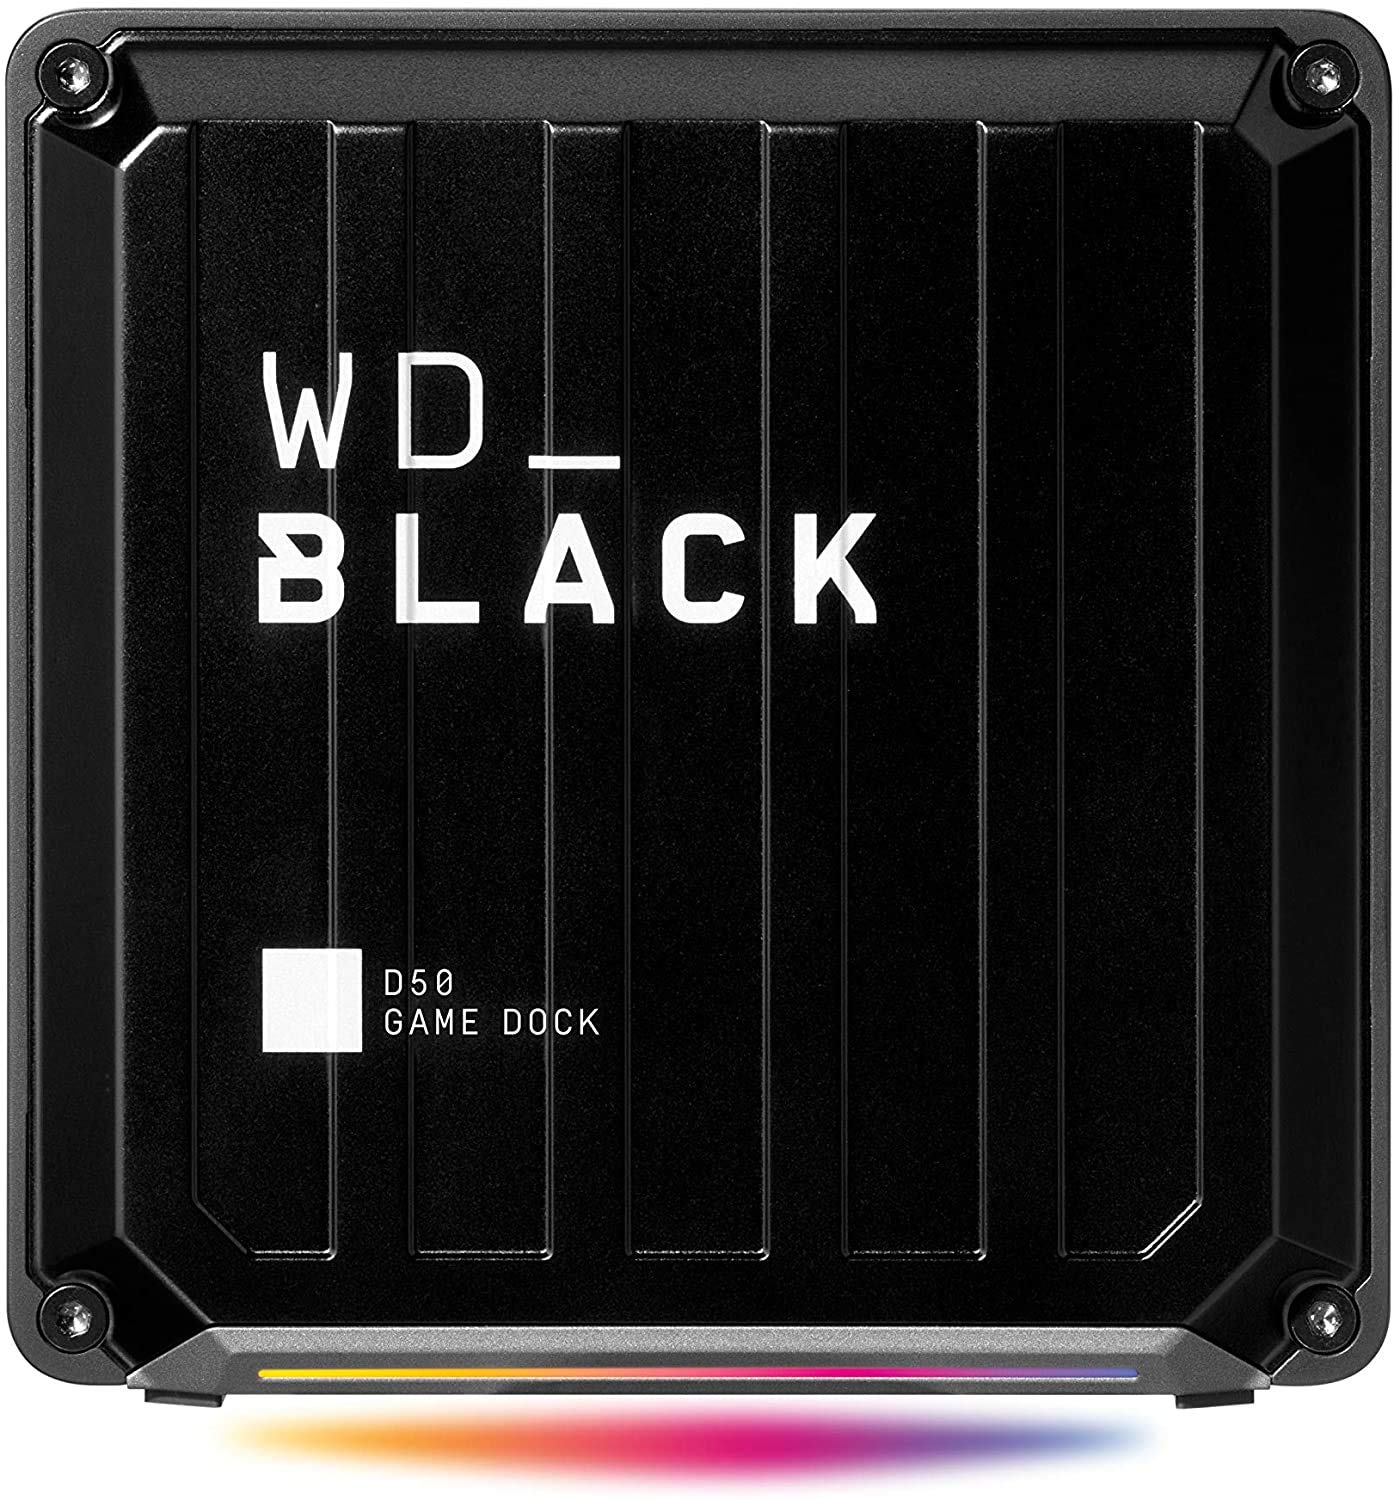 WD BLACK D50 GAME DOCK (W/O